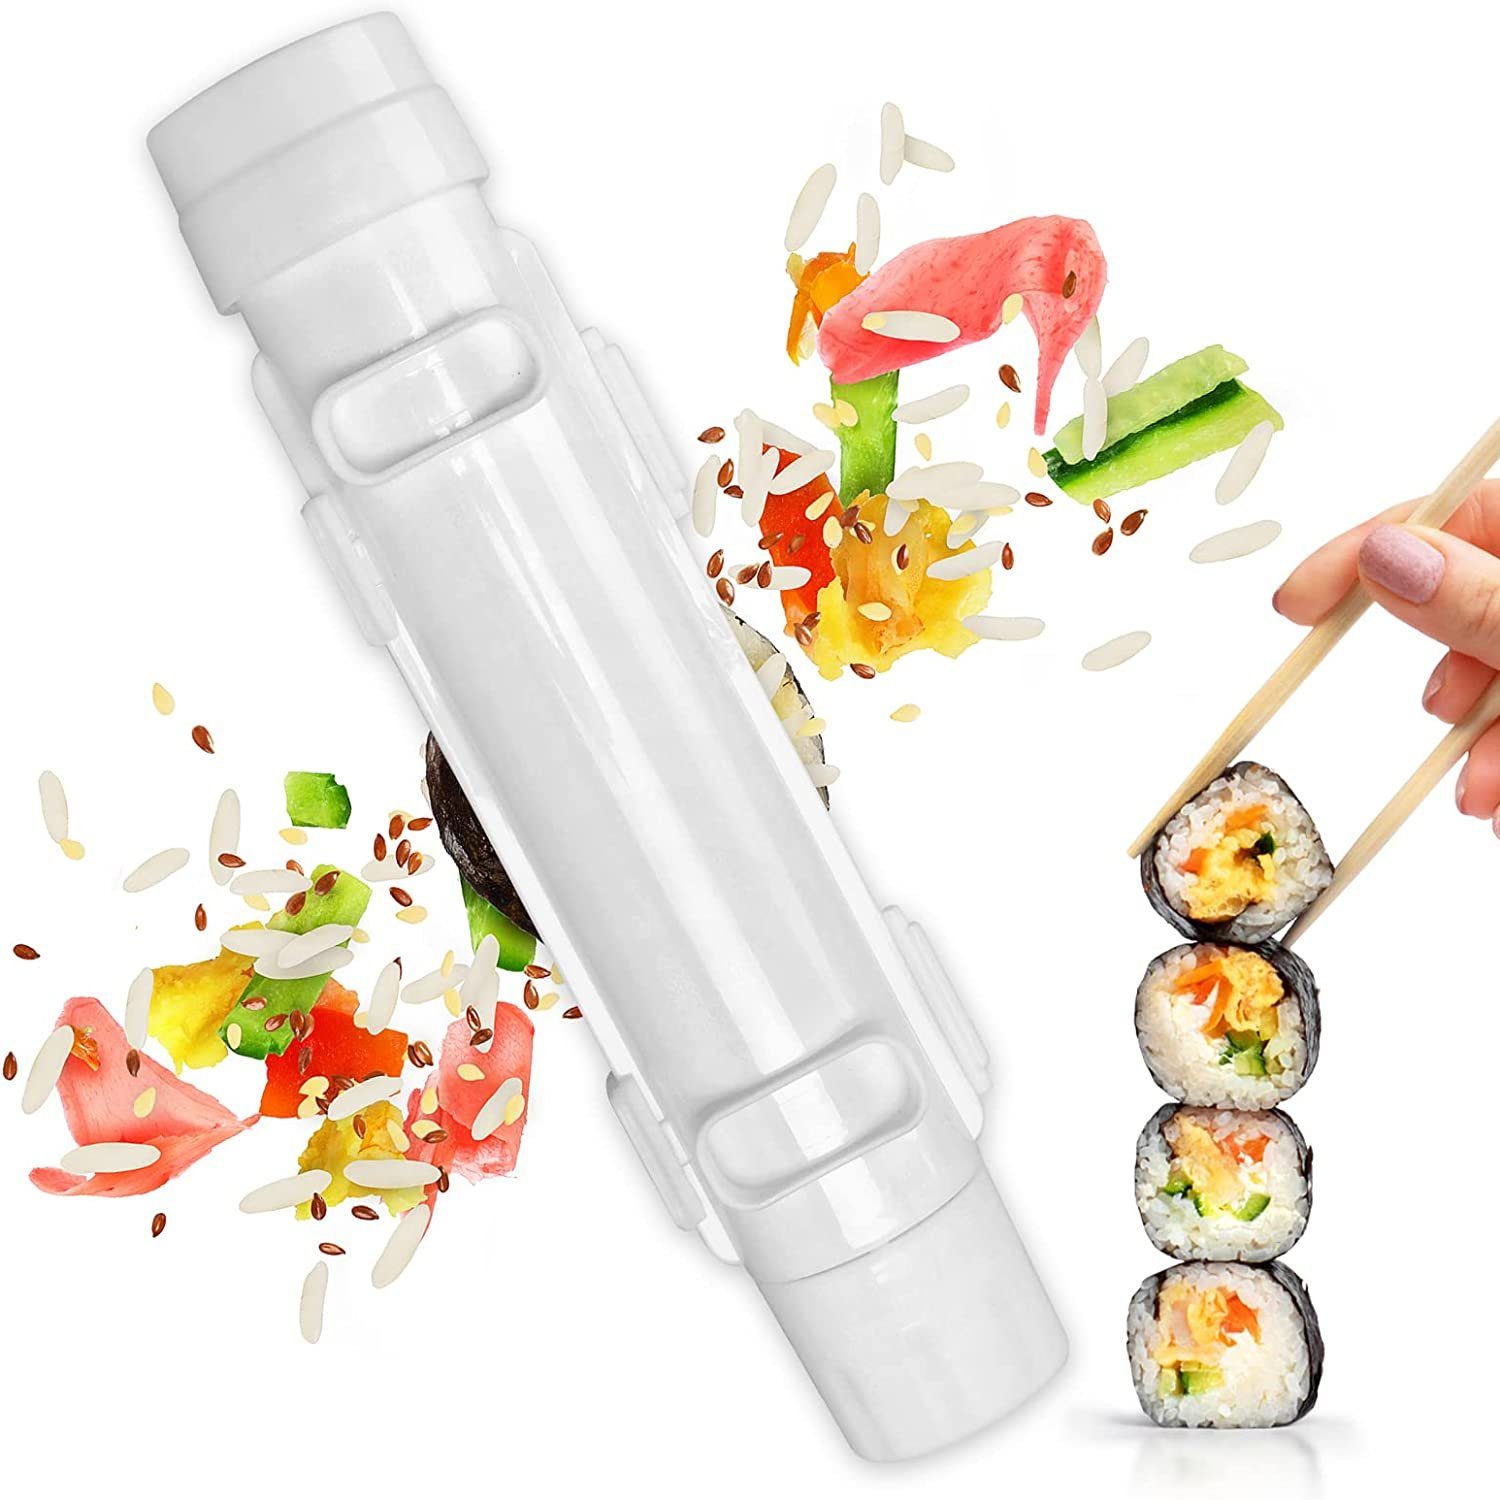 NUODWELL Sushiteller Sushi-DIY-Maschine, Sushi-Bazooka, gemeinsame Zubereitungswerkzeuge Weiß